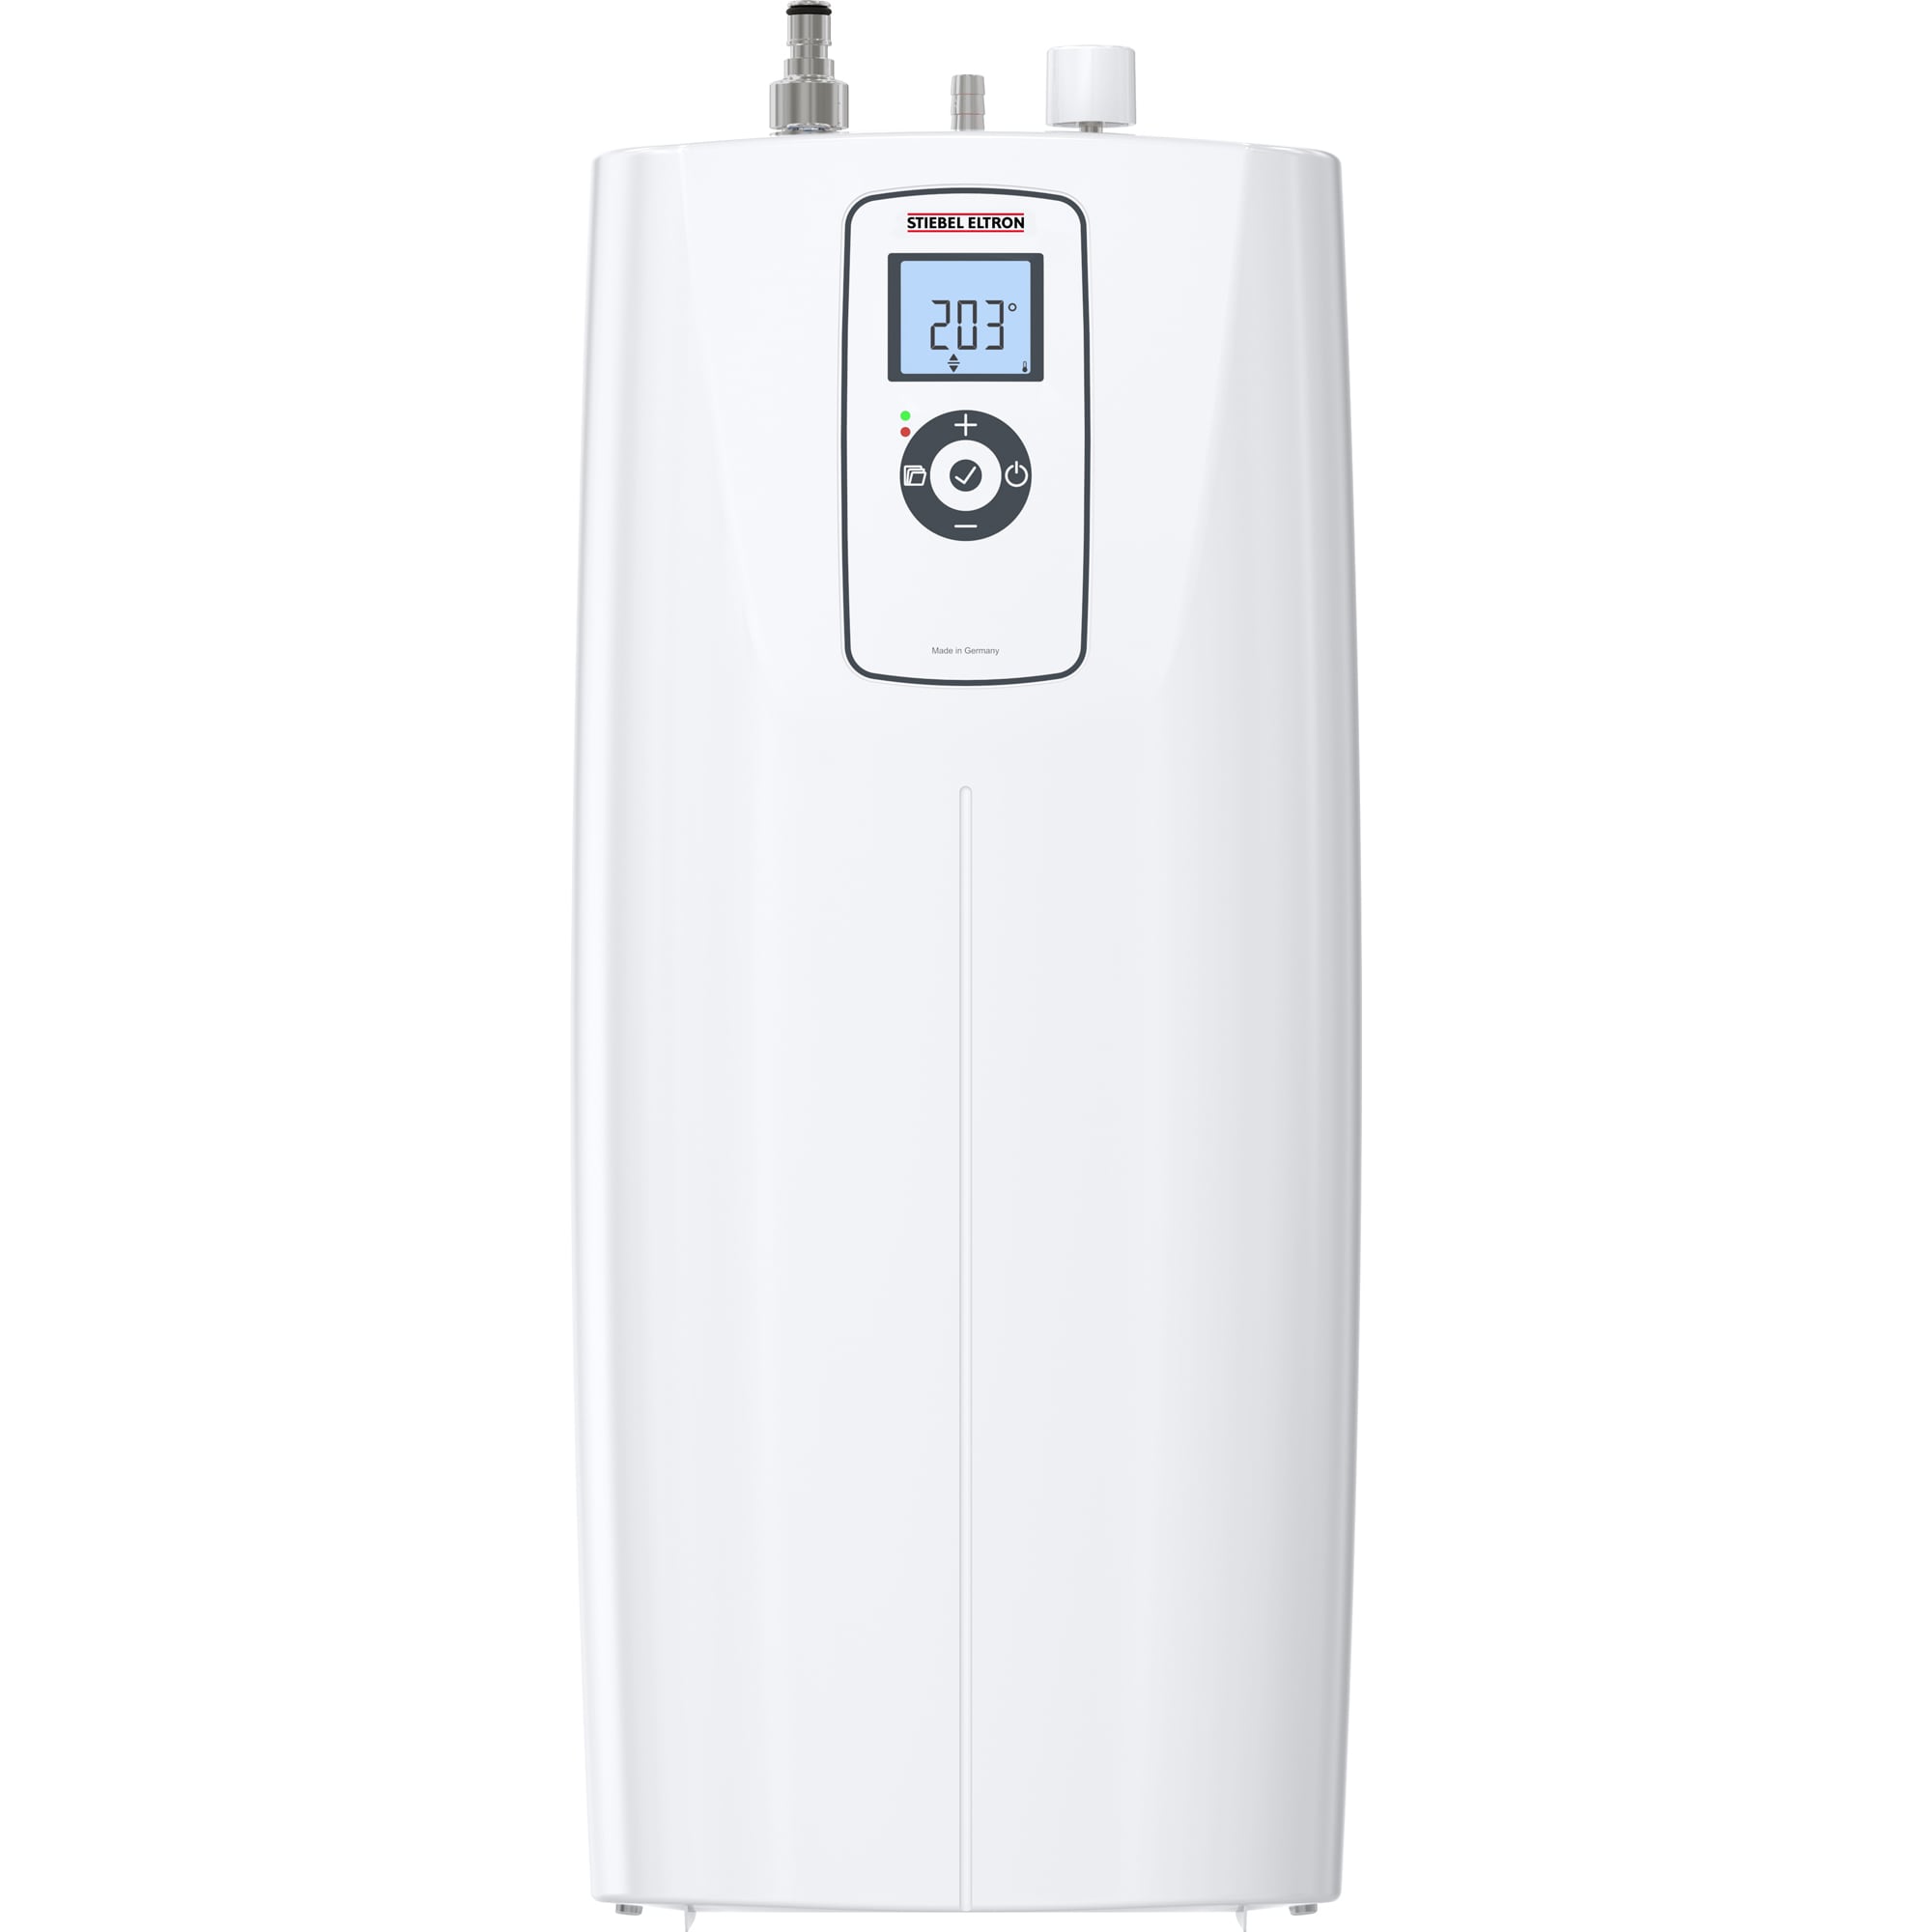 Instant Hot Water Dispenser - Diana Instant Water Heater